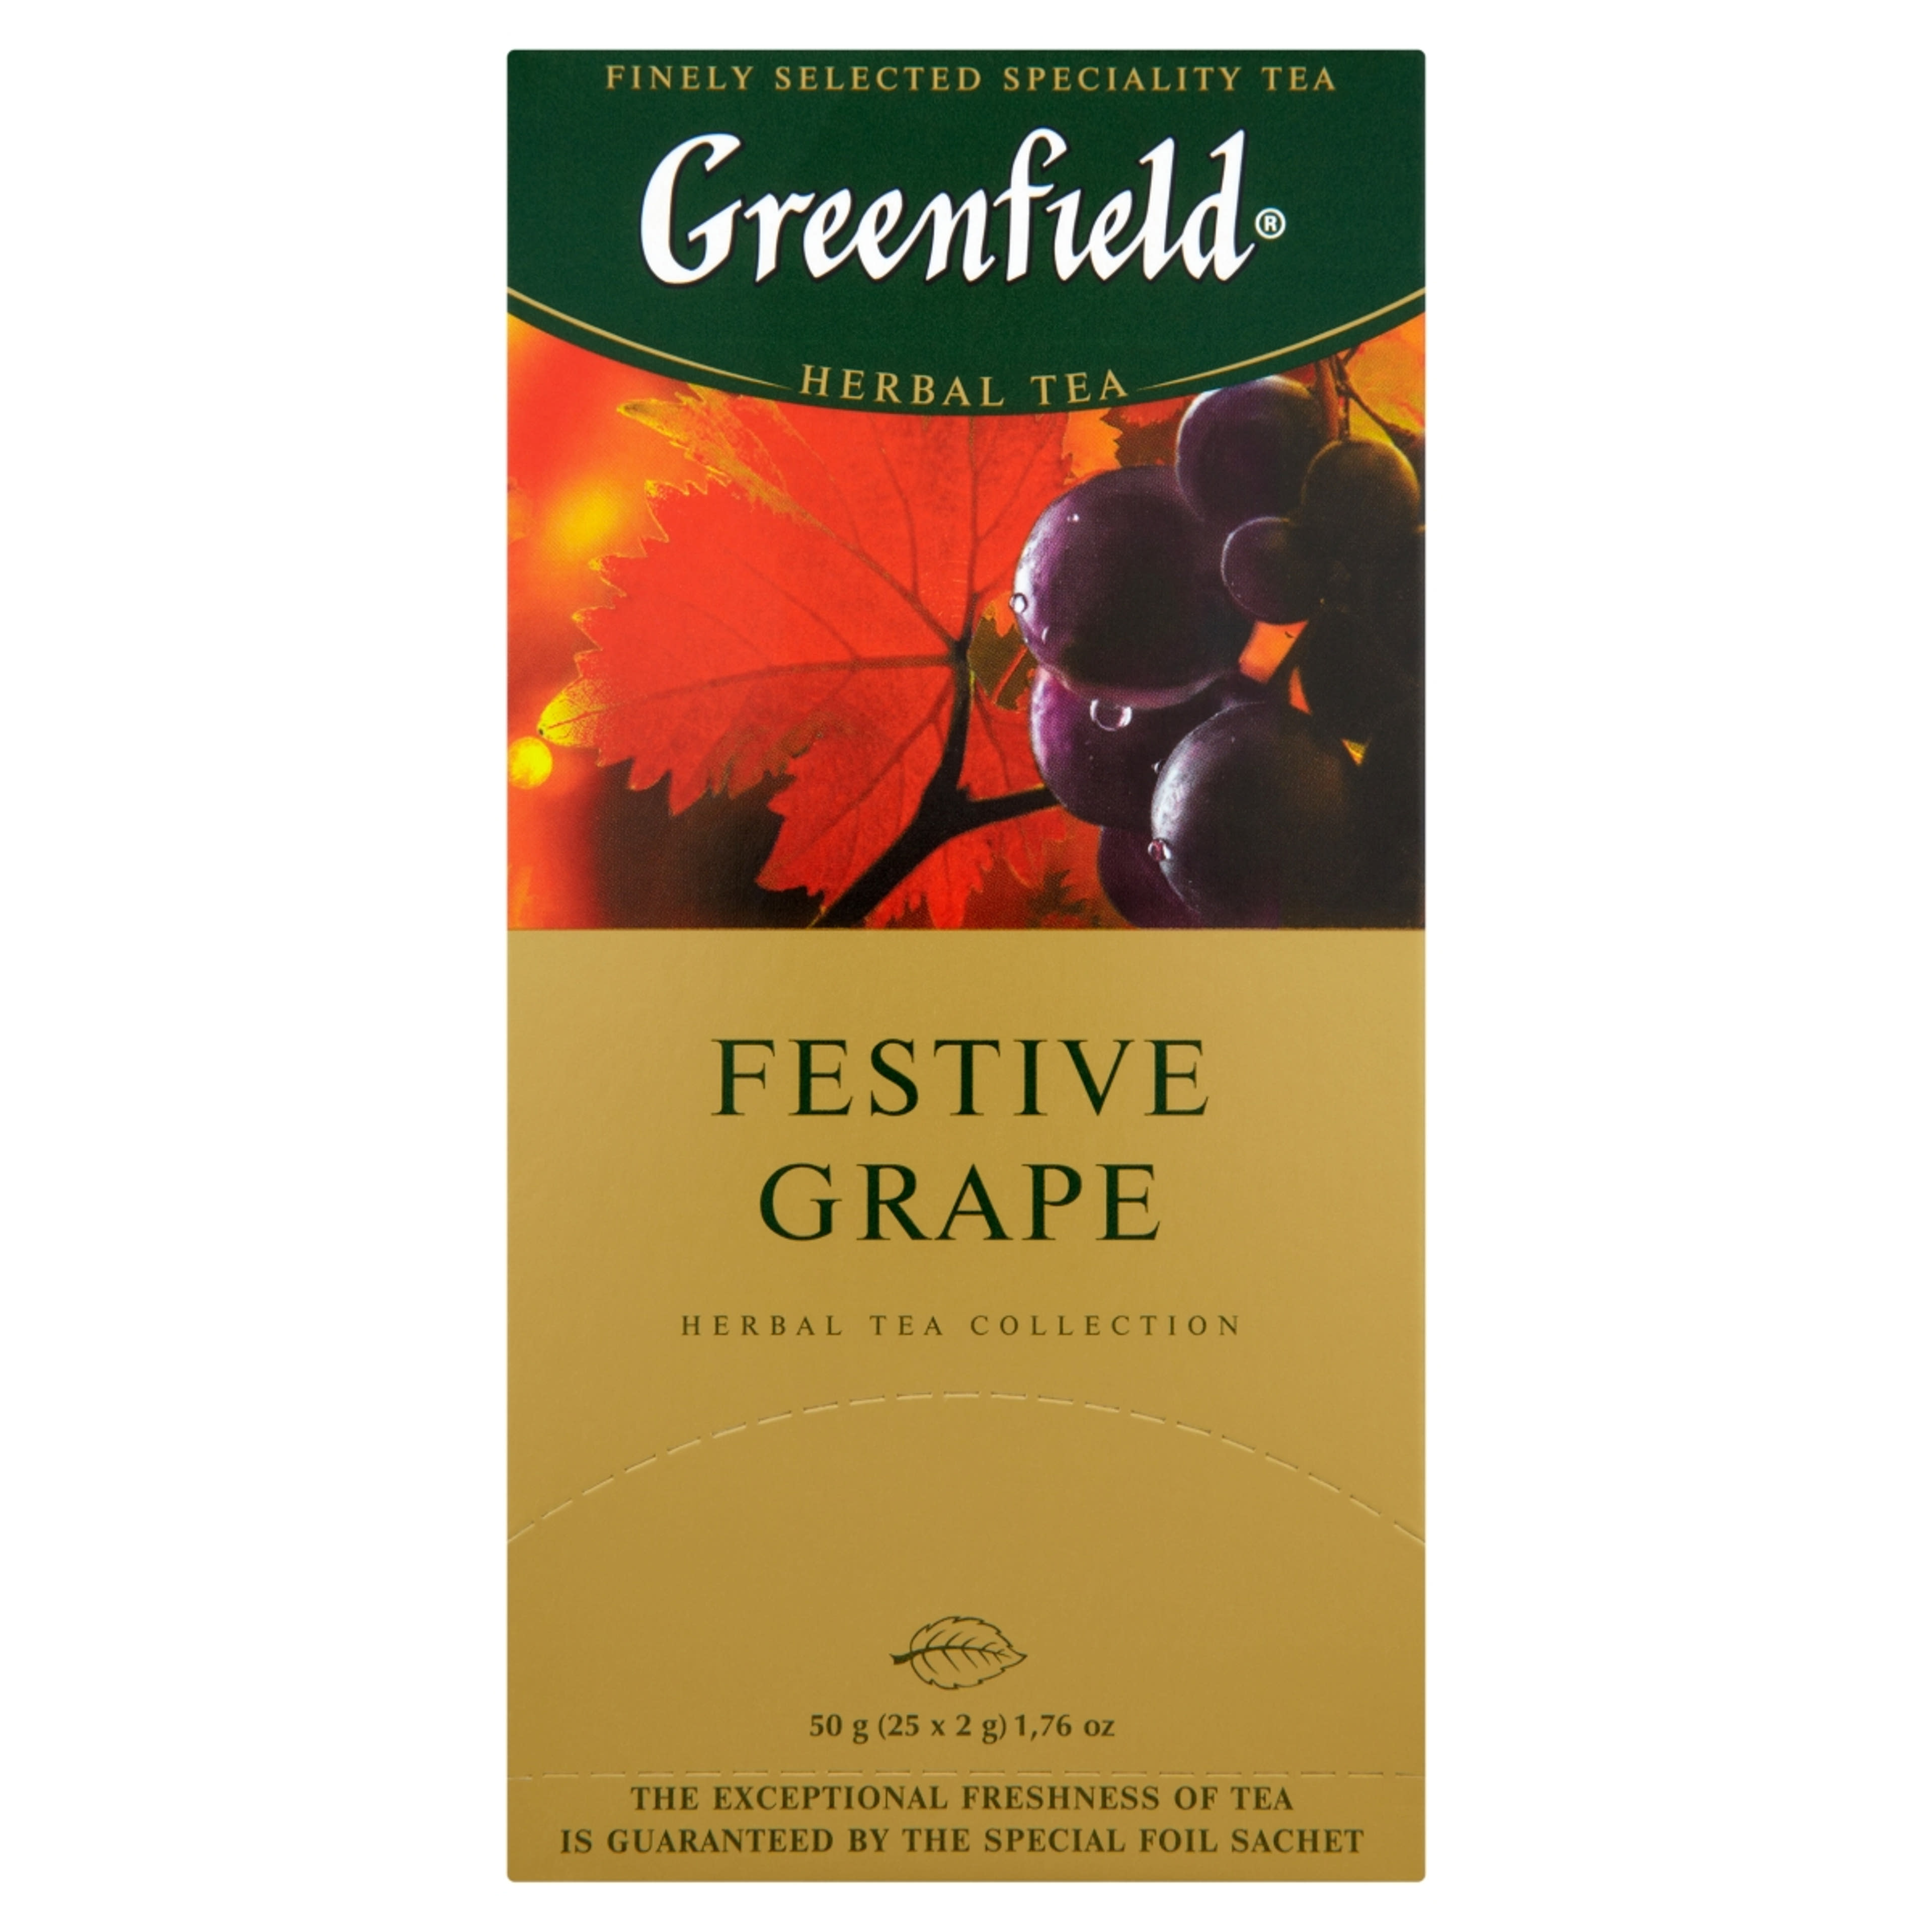 Greenfield Festive Grape tea - 50 g